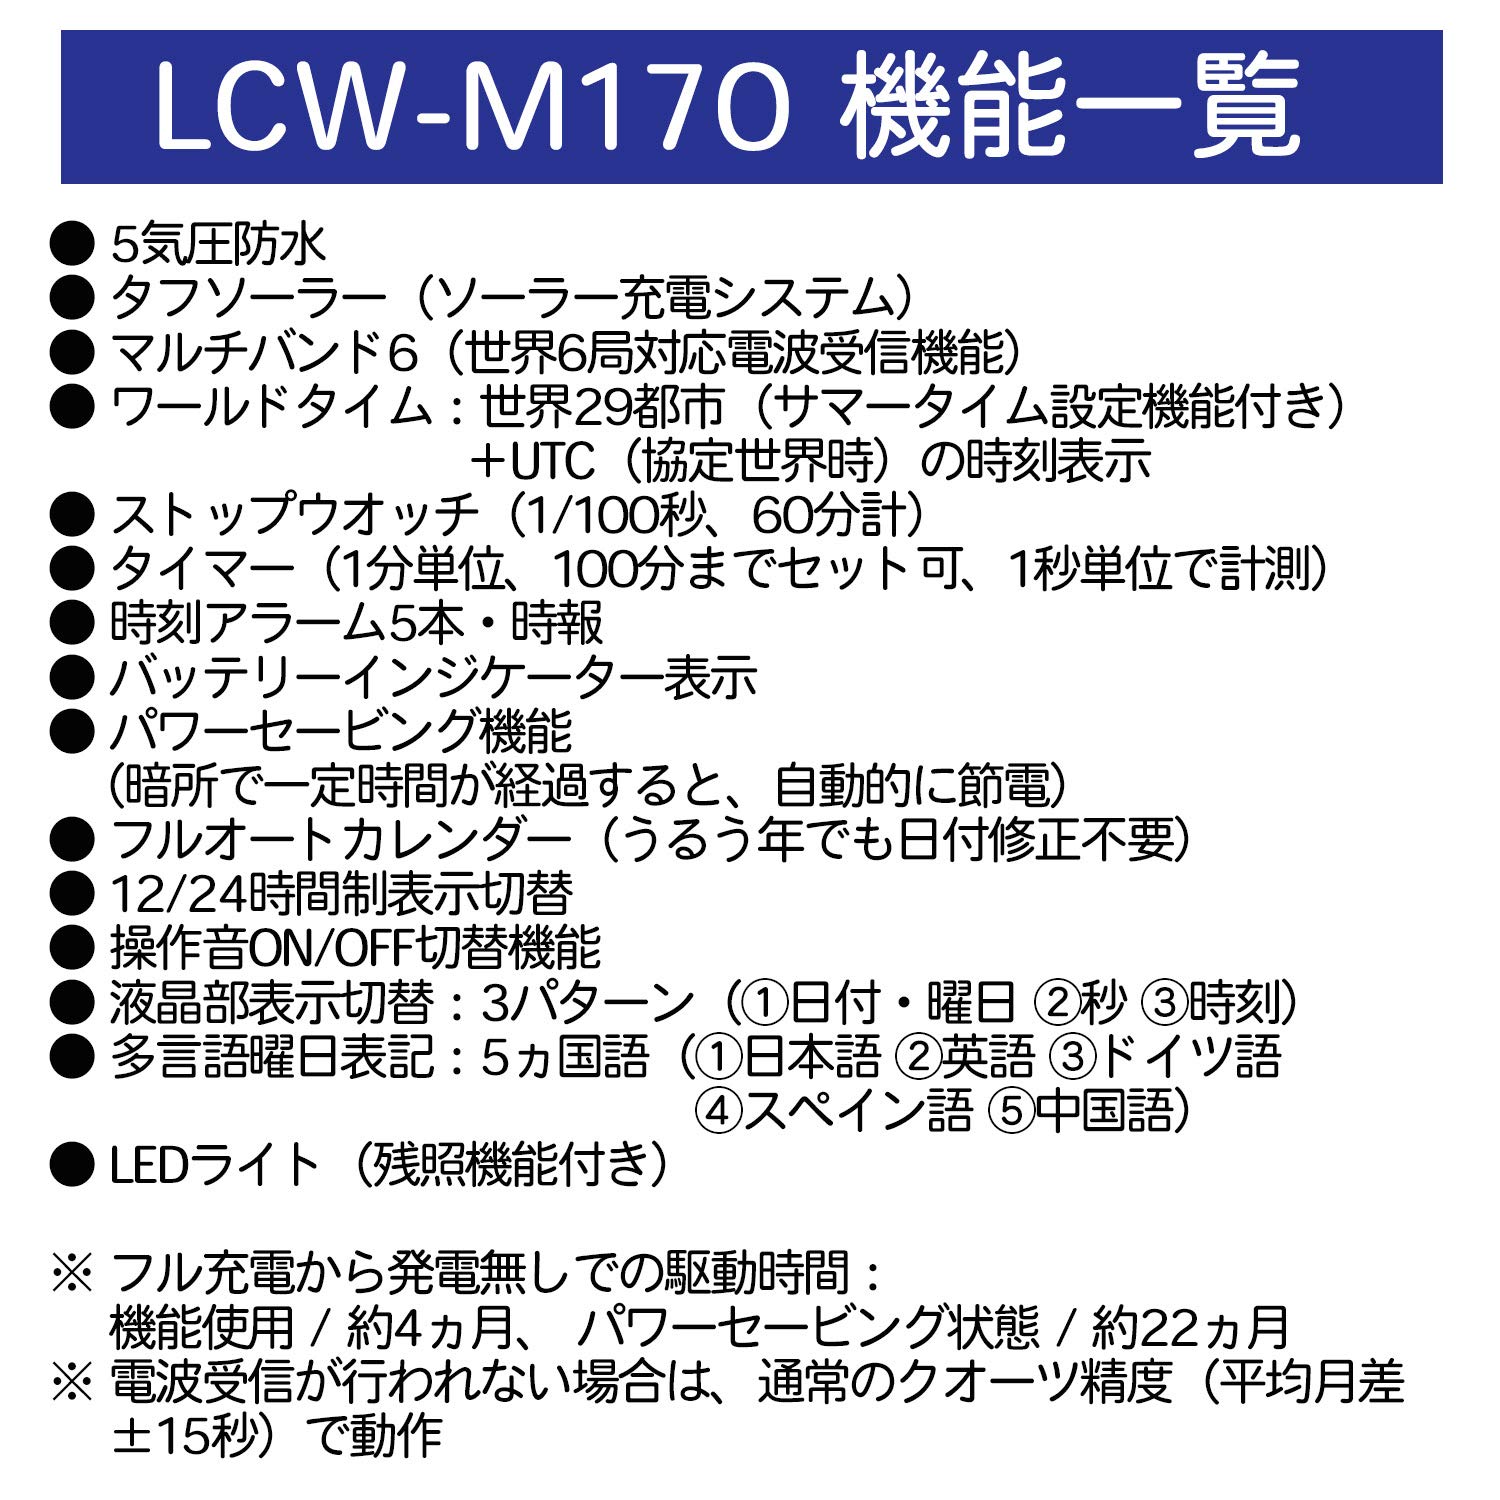 CASIO LINEAGE (LCW-M170TD-7AJF) 6 MULTIBANDS RADIO SOLAR MENS WRISTWATCH (JAPANESE MODEL)